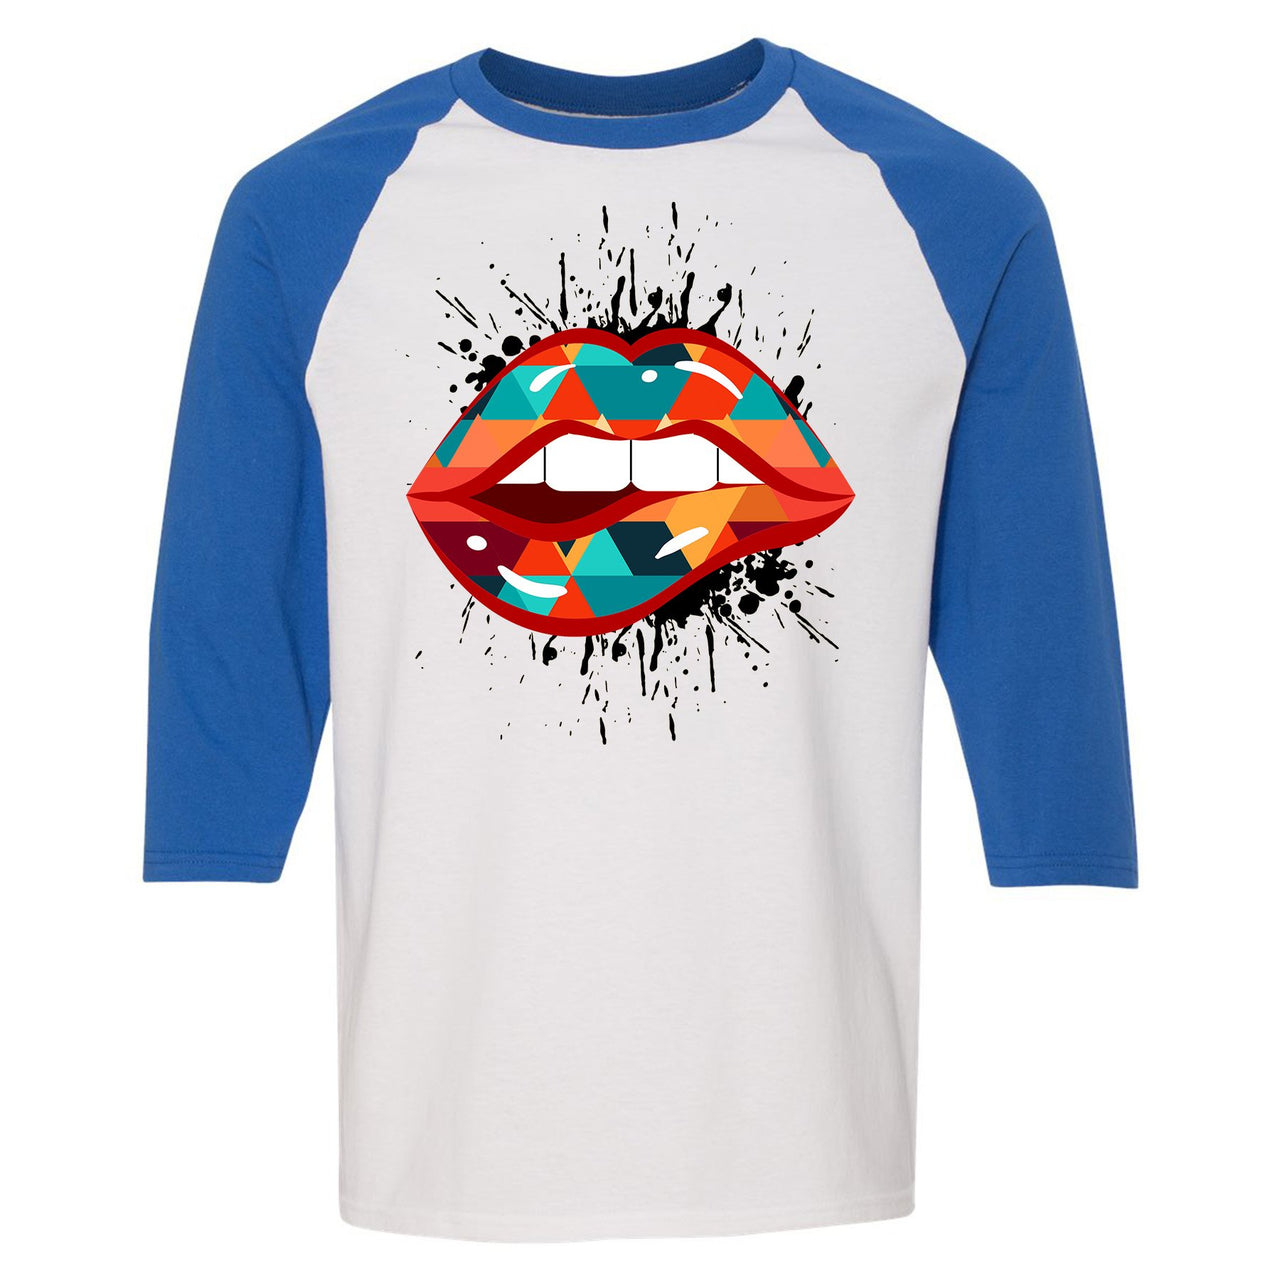 Multicolor 98s Raglan T Shirt | Lips Geometric Design, White and Royal Blue